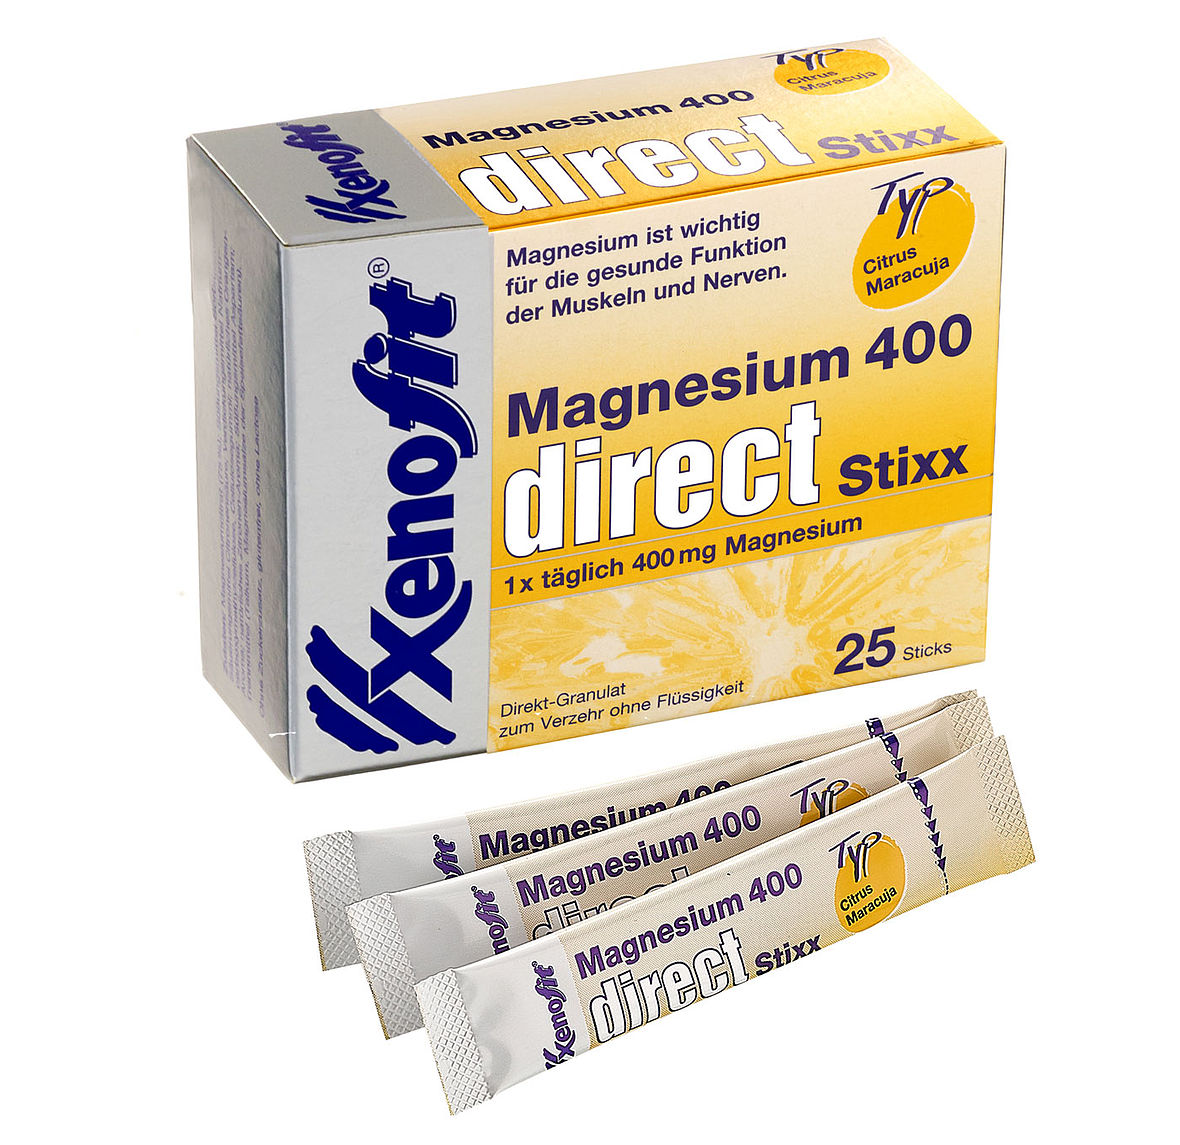 Xenofit Magnesium 400 direct Stixx - enthält 400 g (hochdosierte Magnesiumkombination aus Magnesiumcitrat und Magnesiumoxid)